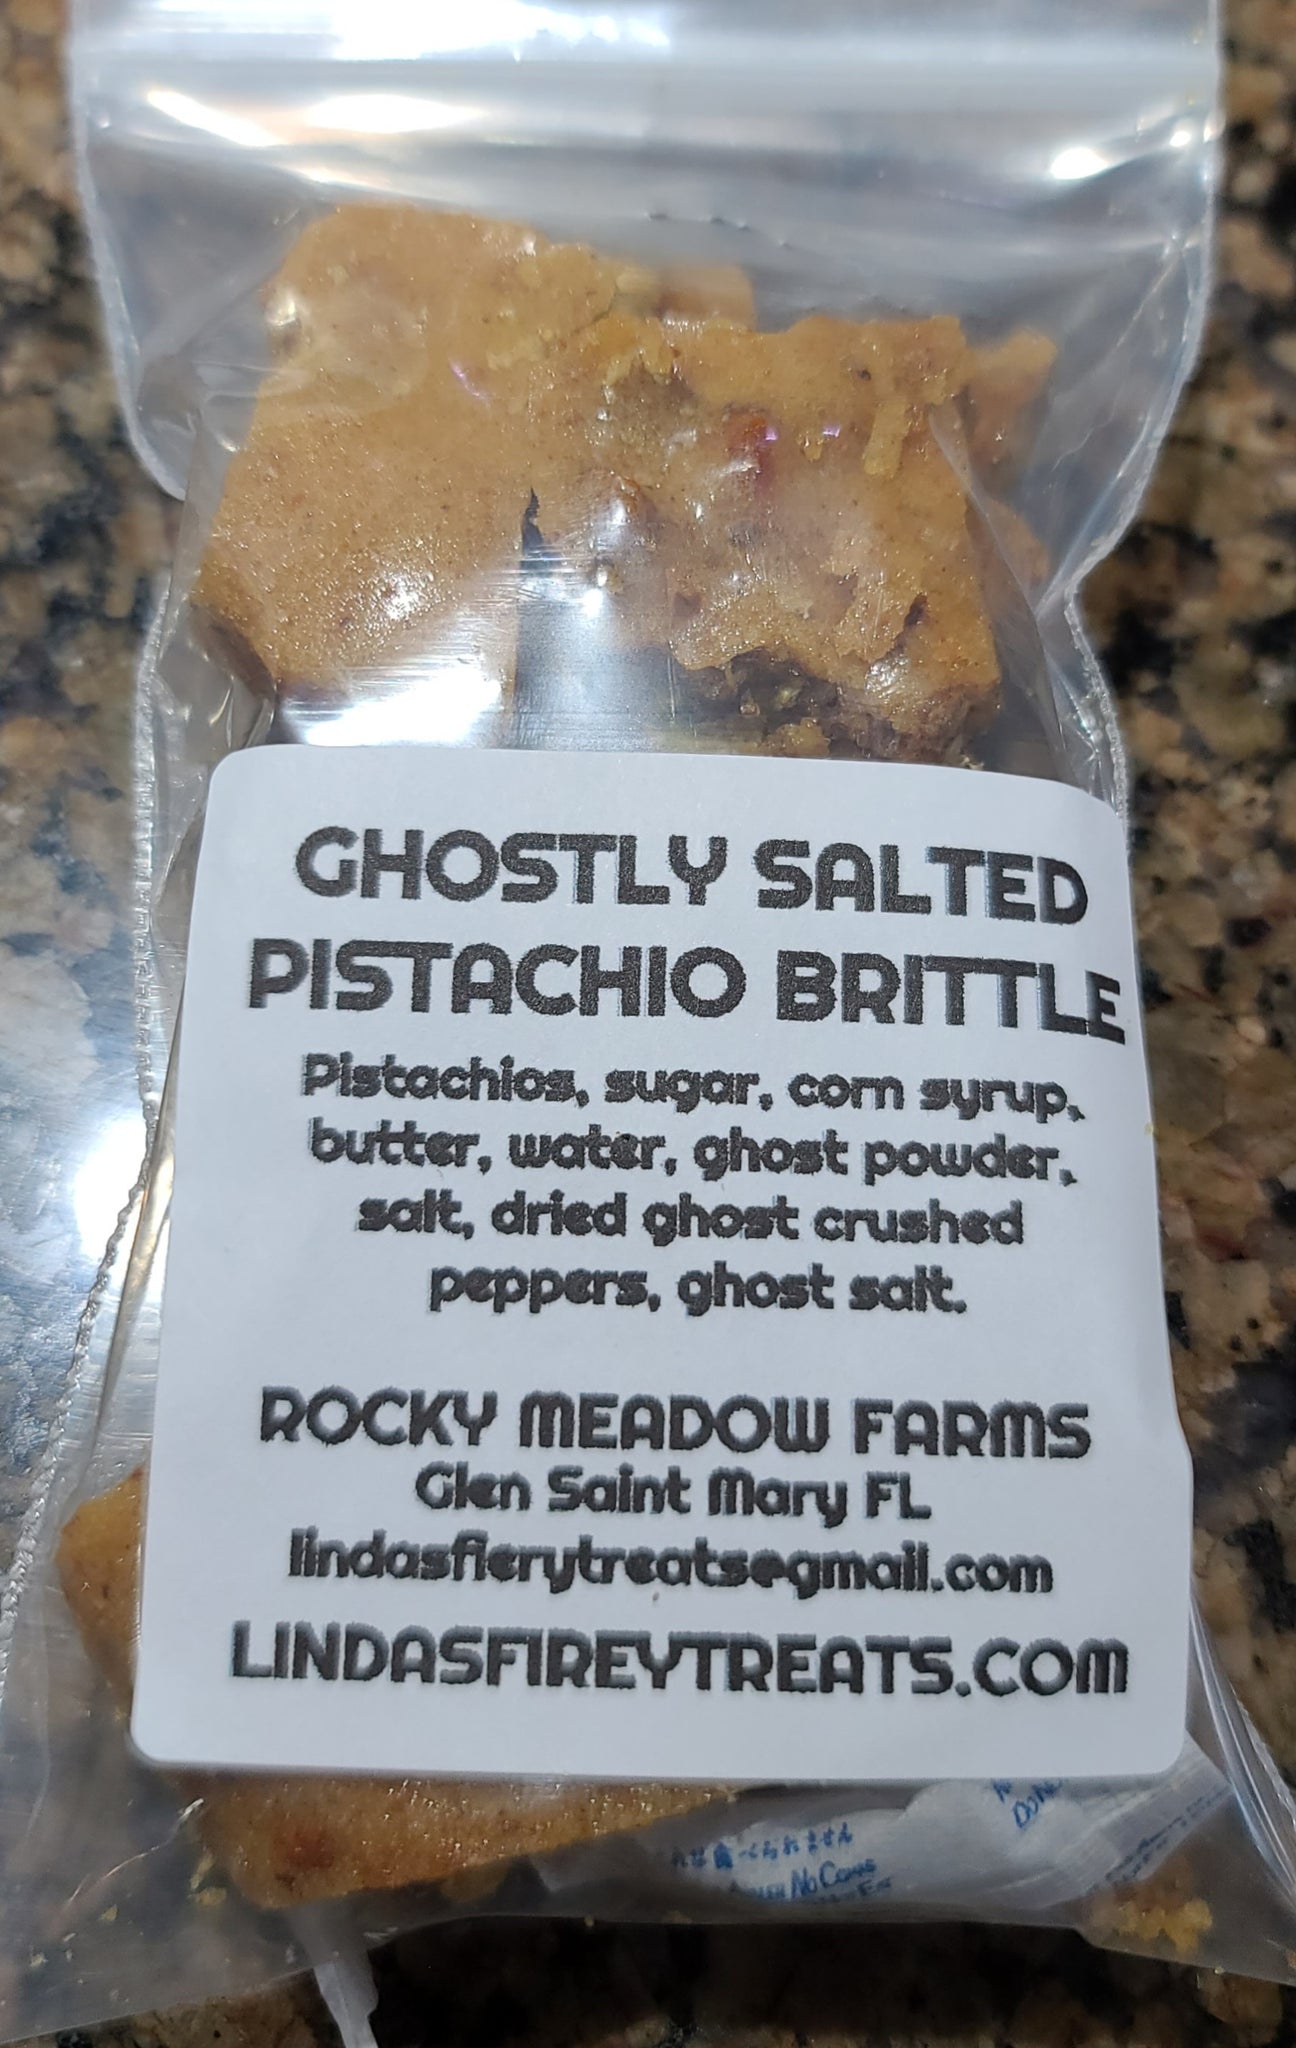 PISTACHIO - Ghostly salted pistachio brittle